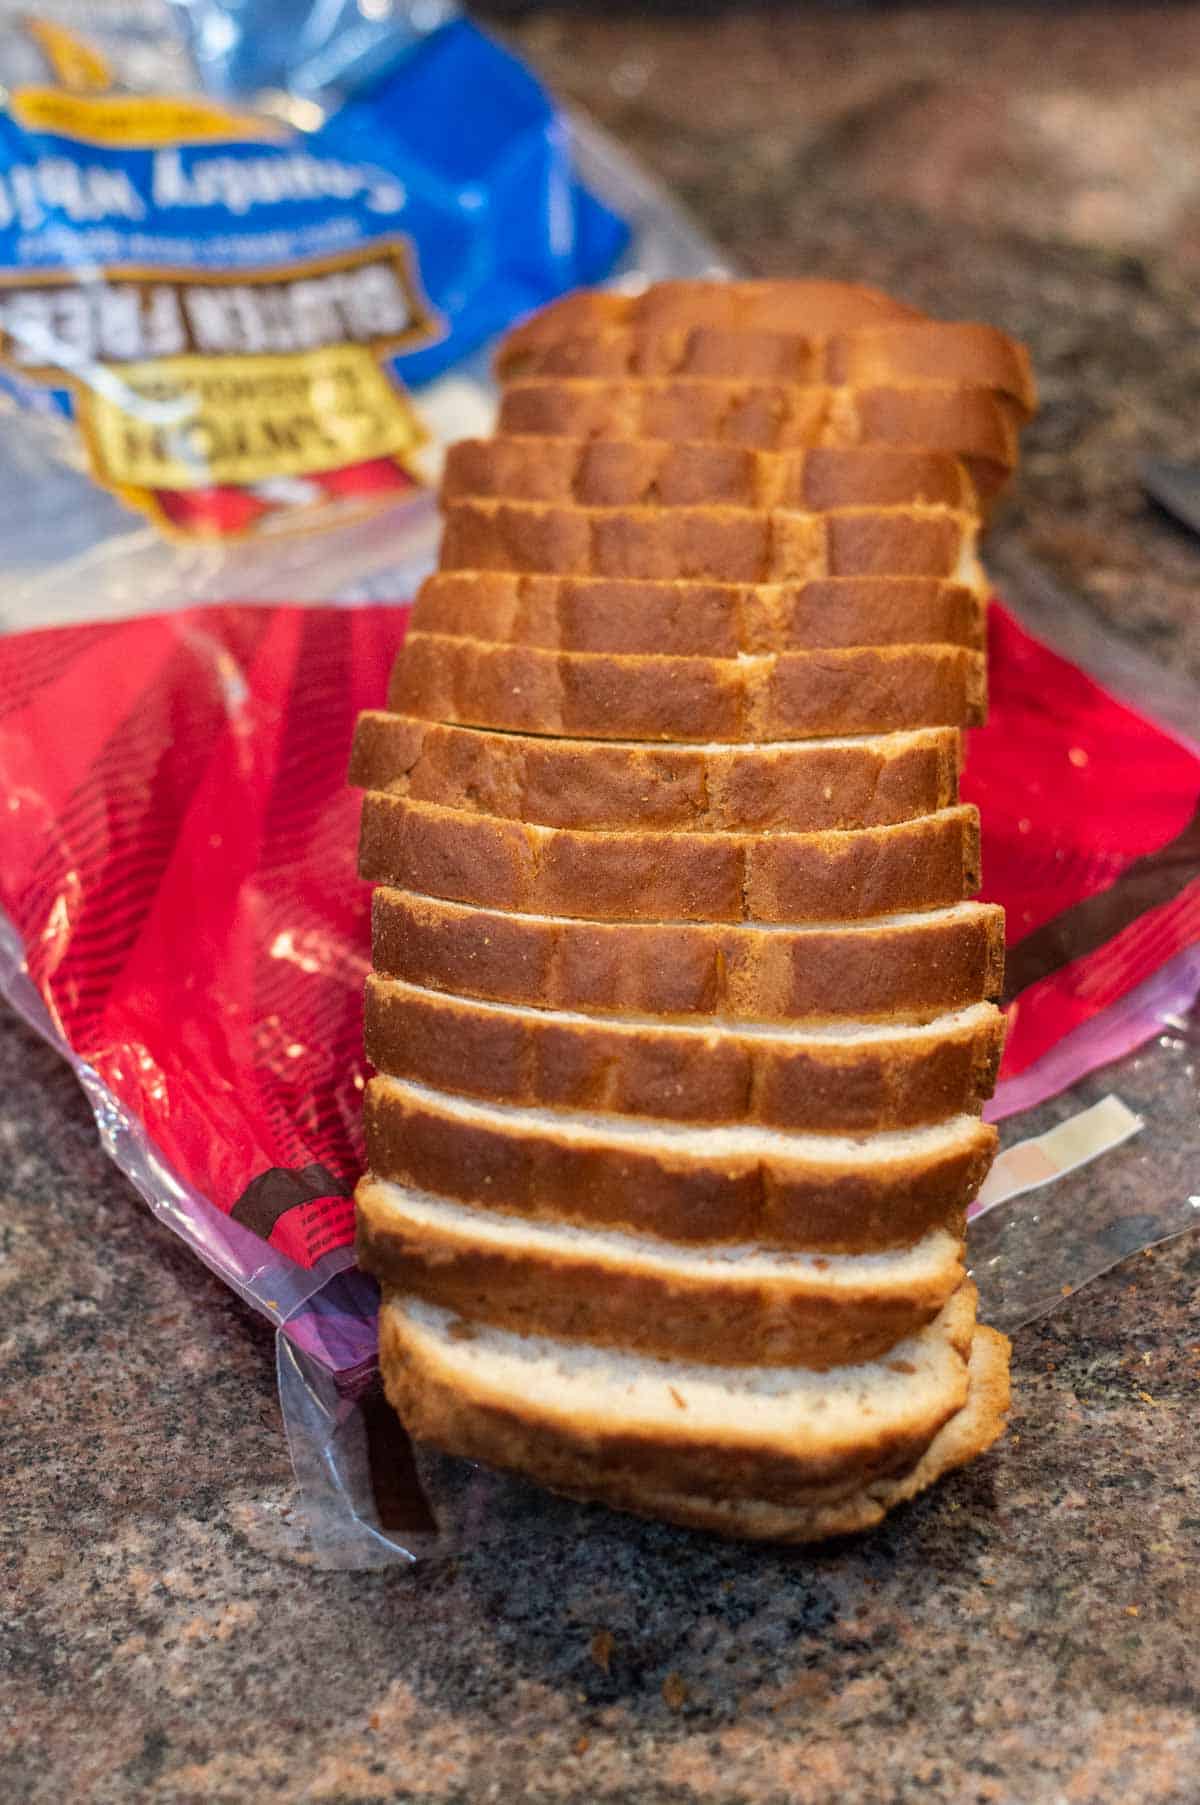 Gluten-free bread loaf sliced